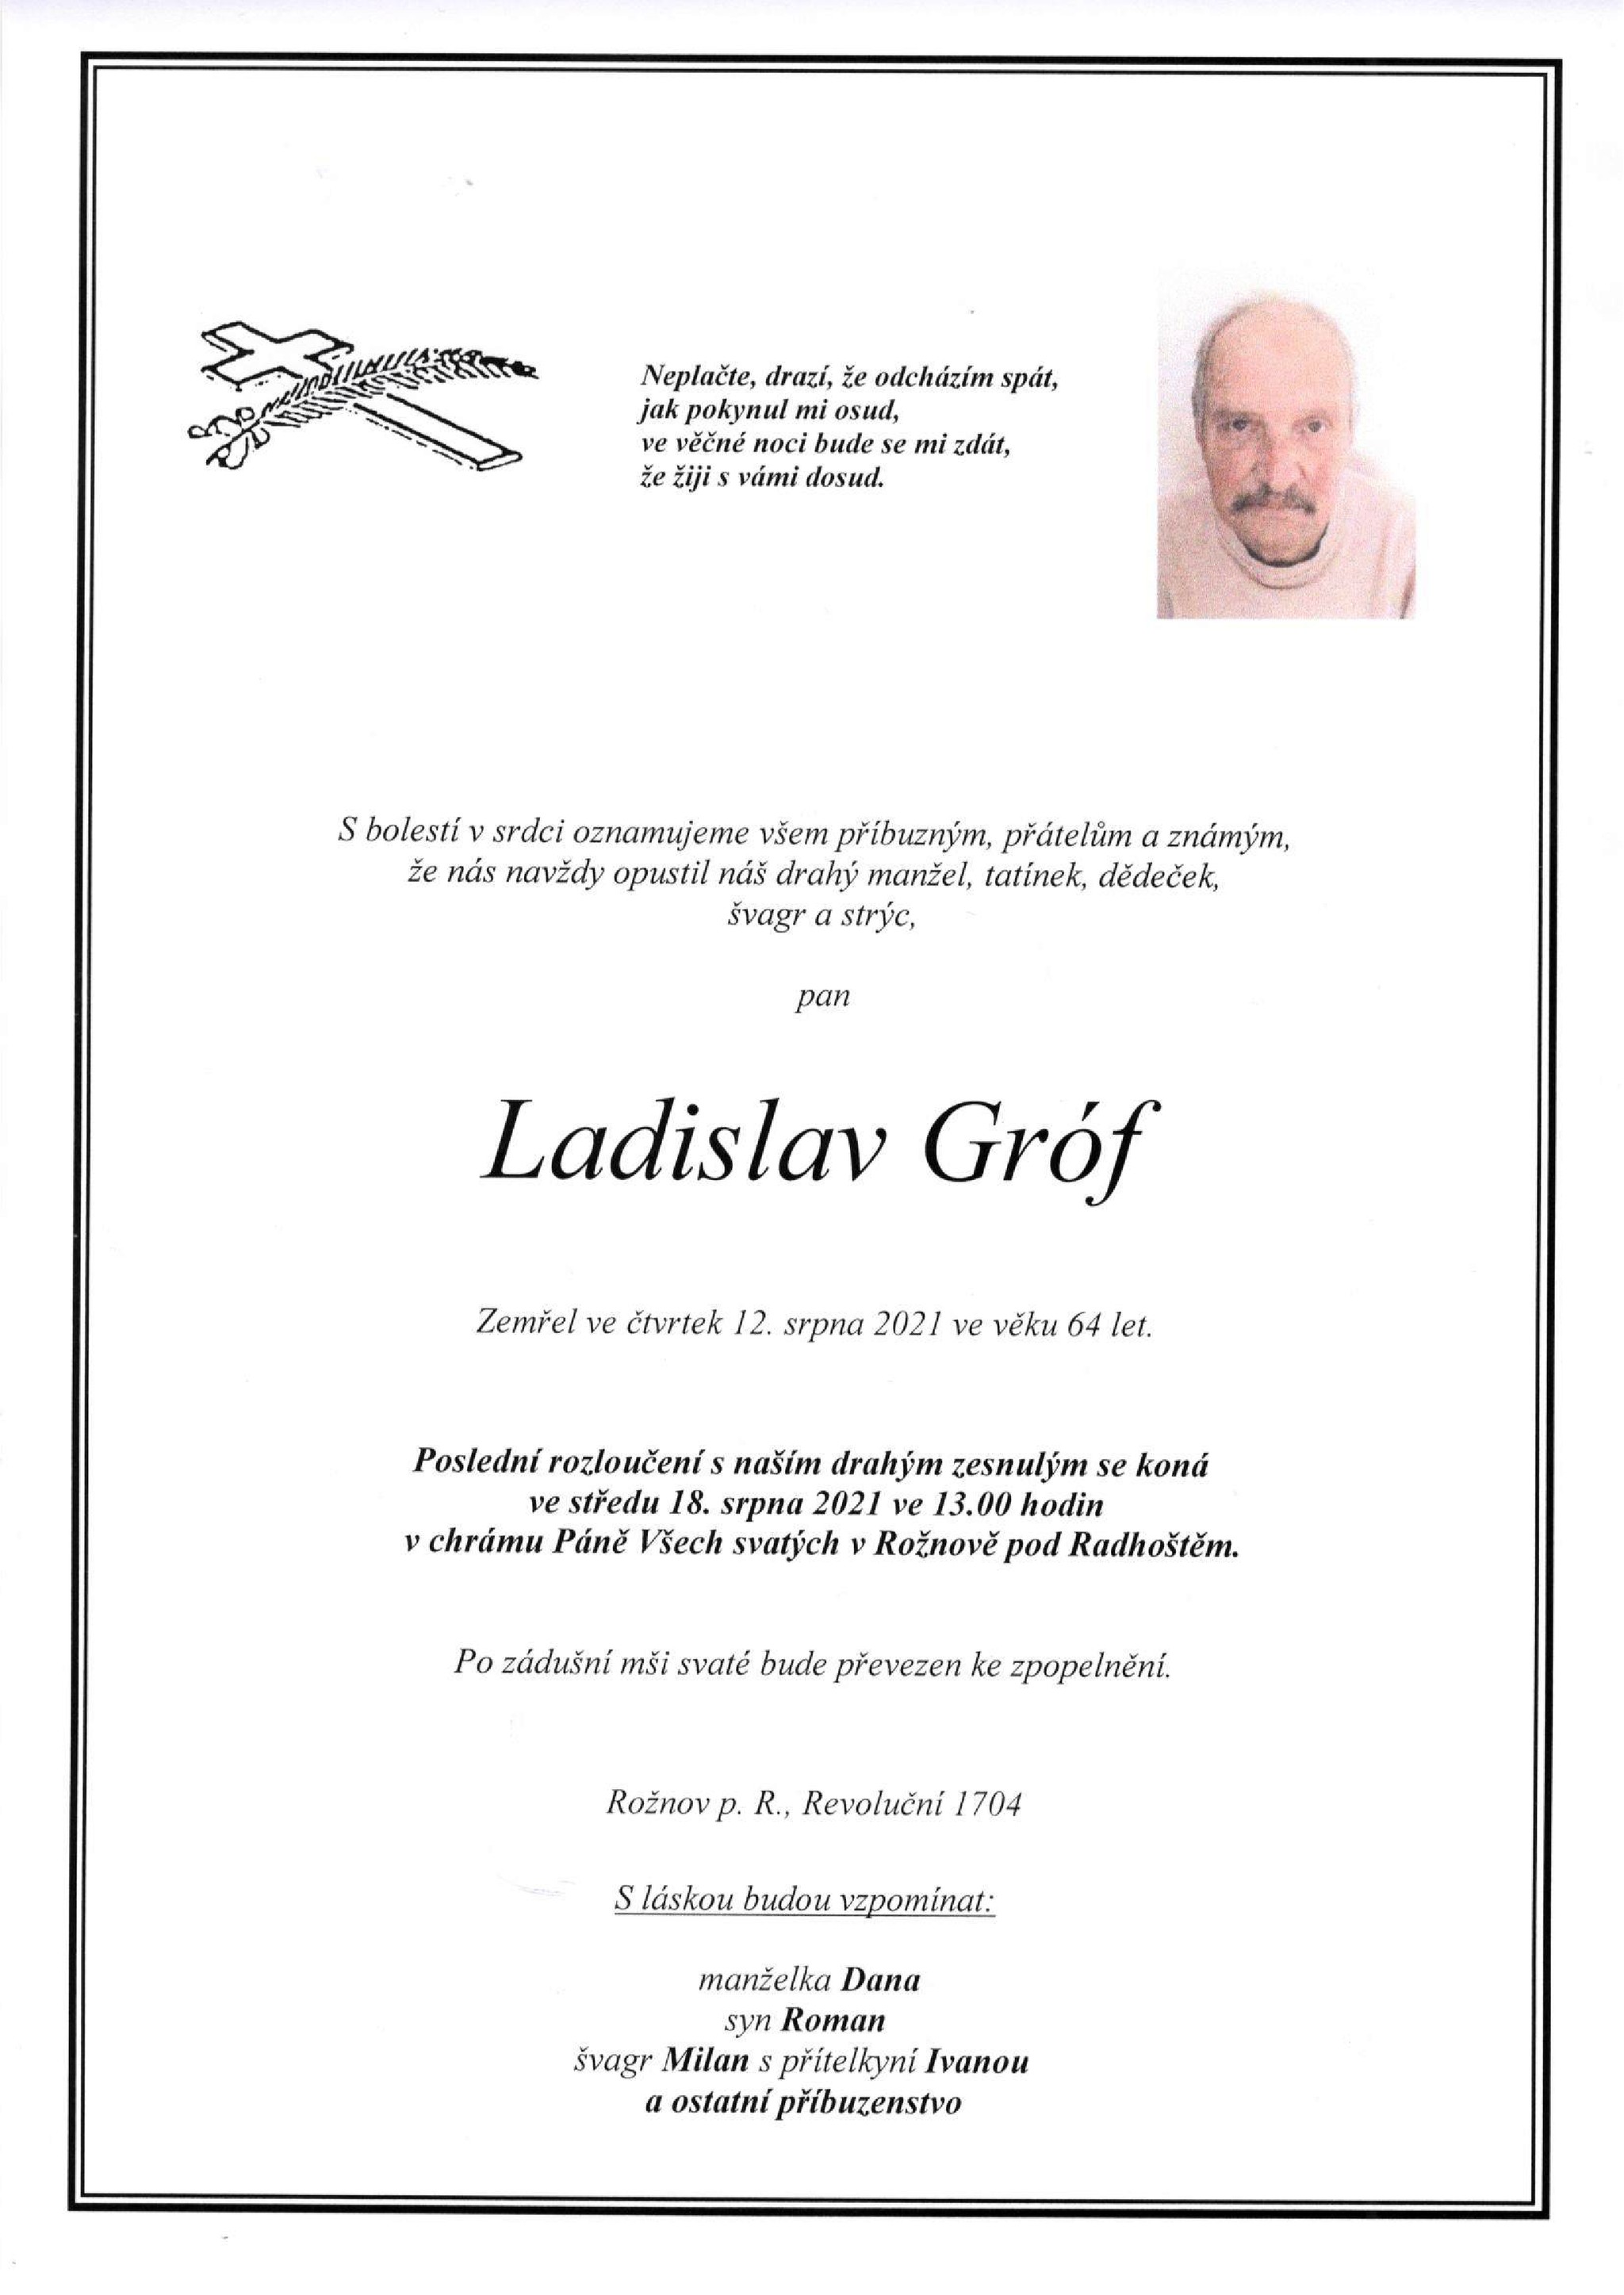 Ladislav Gróf